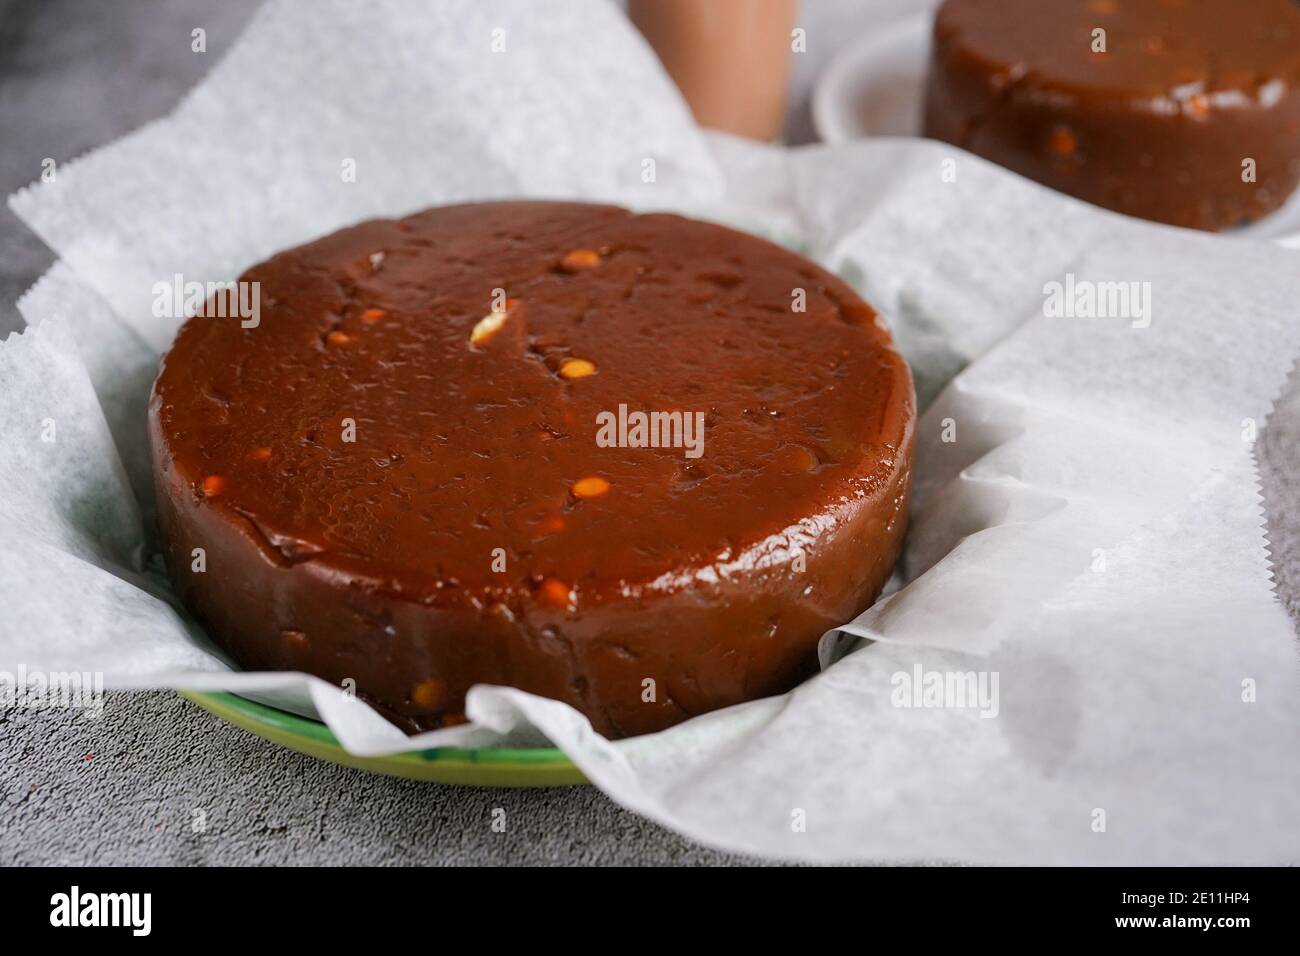 BlackKinnathappam / Kannur Malabar special snack with rice flour jaggery and channa Daal Stock Photo